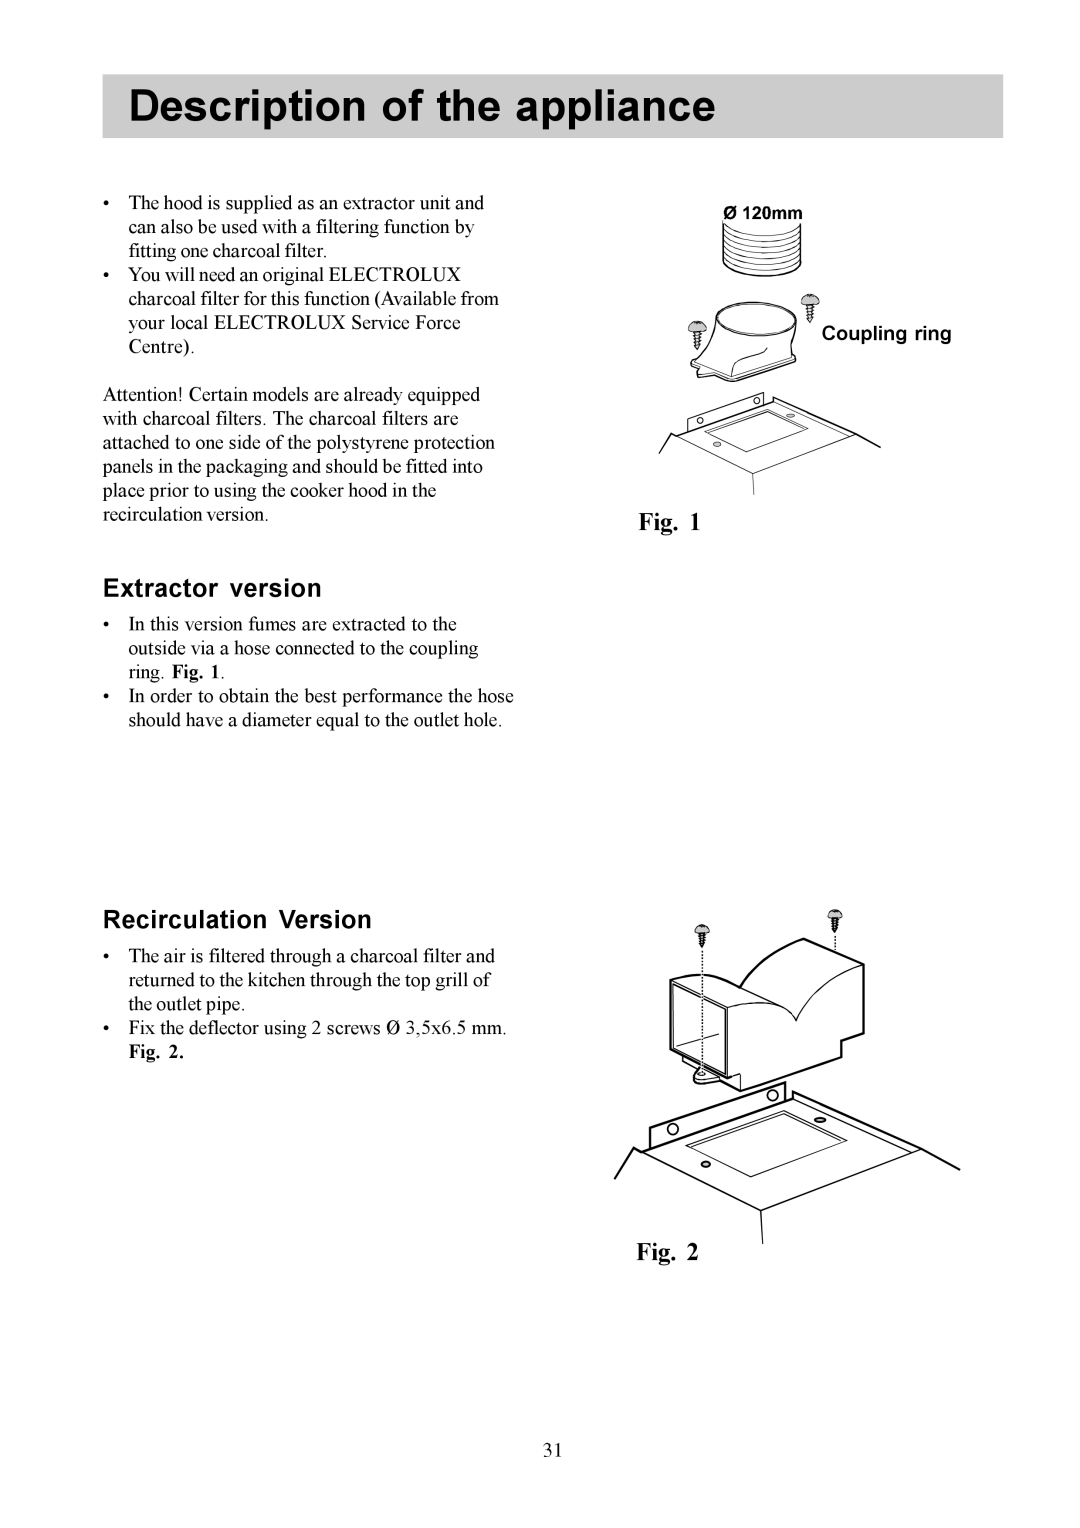 Electrolux CH 1200-900-600, EFC 650-950-640 Description of the appliance, Extractor version, Recirculation Version 